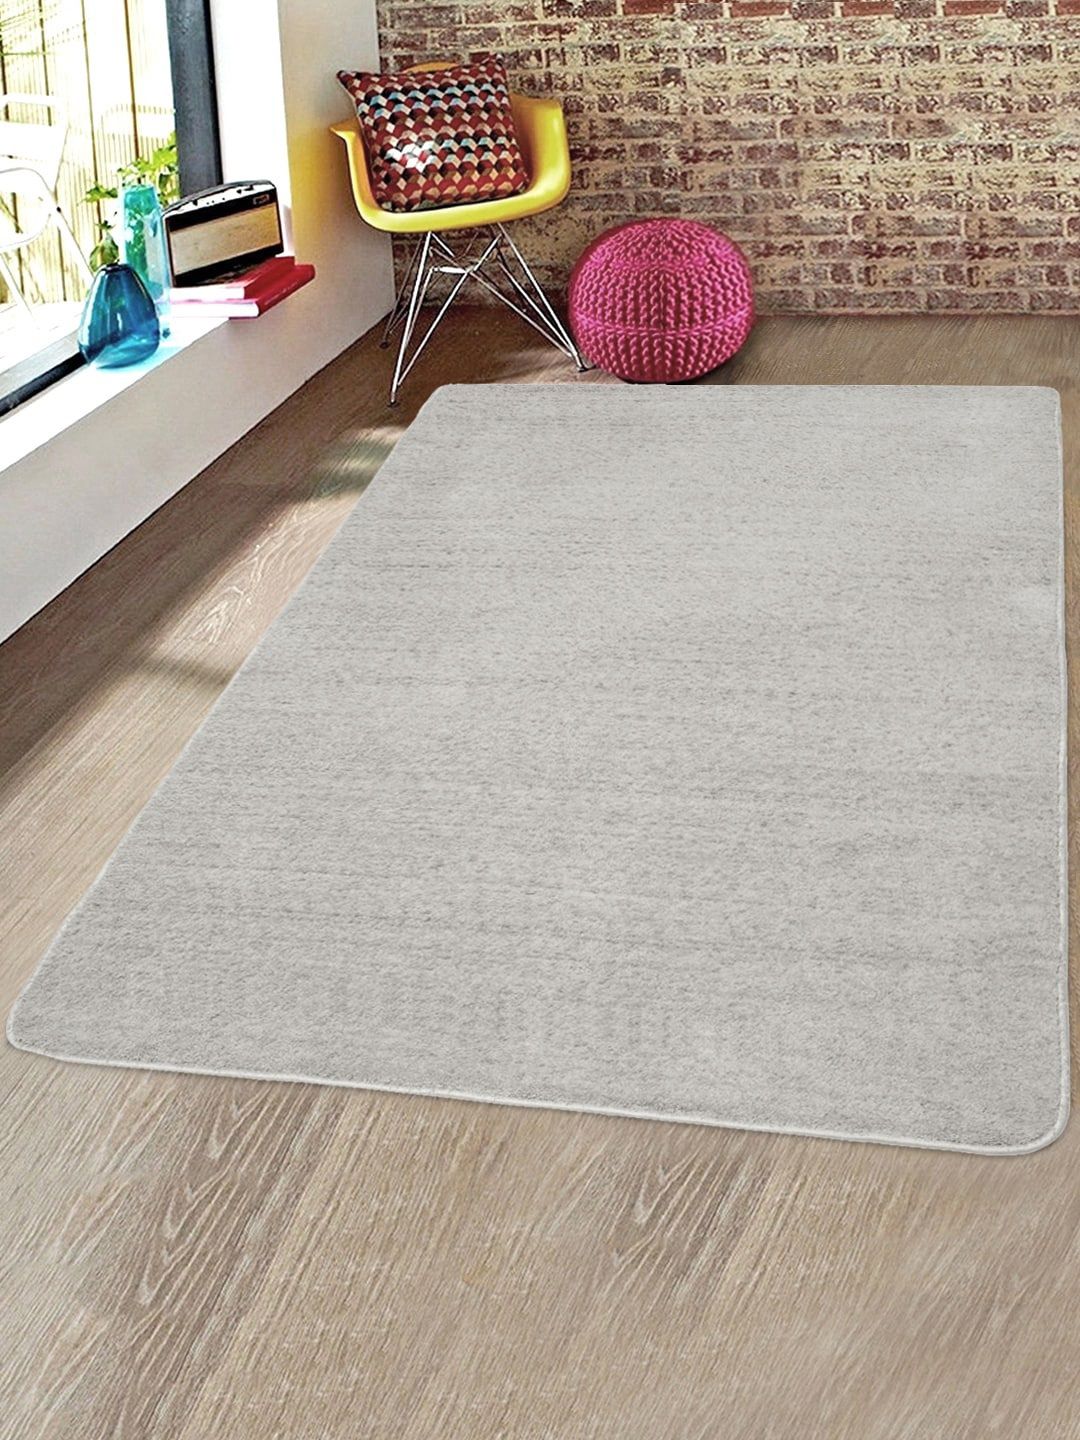 Saral Home Unisex Grey-Melange Solid Anti-Skid Carpet Price in India